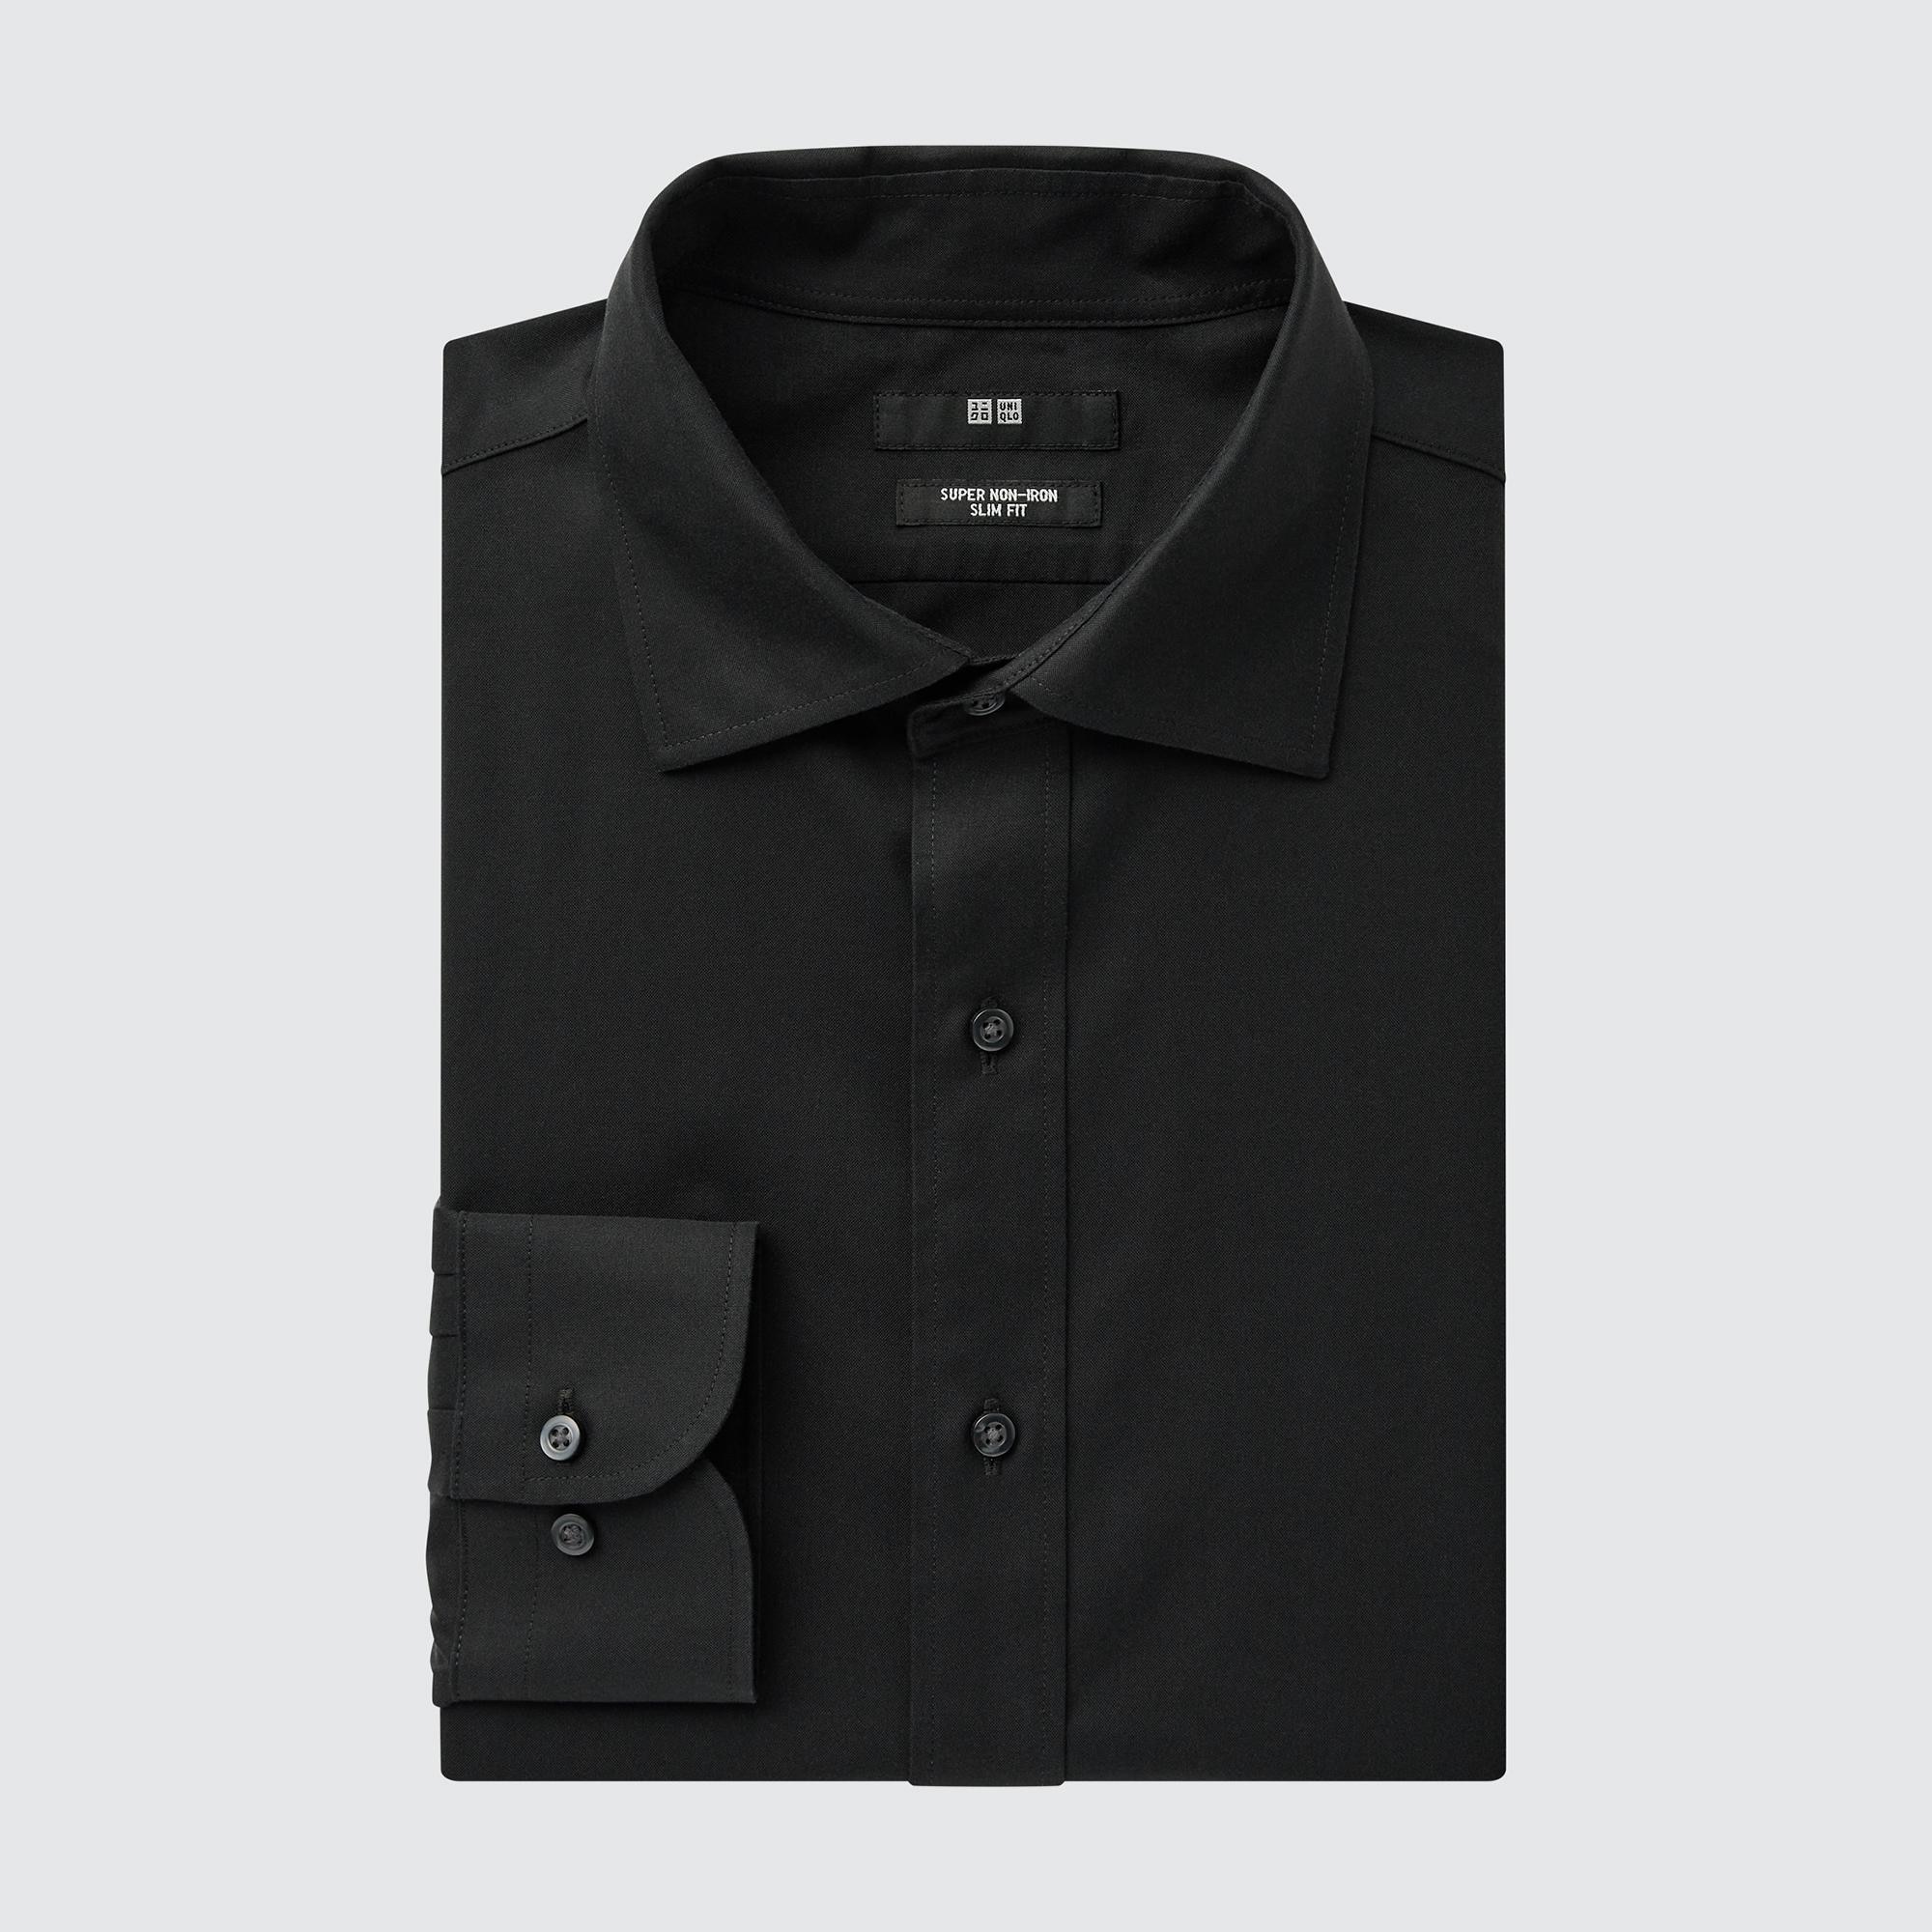 Super NonIron SlimFit LongSleeve Shirt SemiWide Collar  UNIQLO US